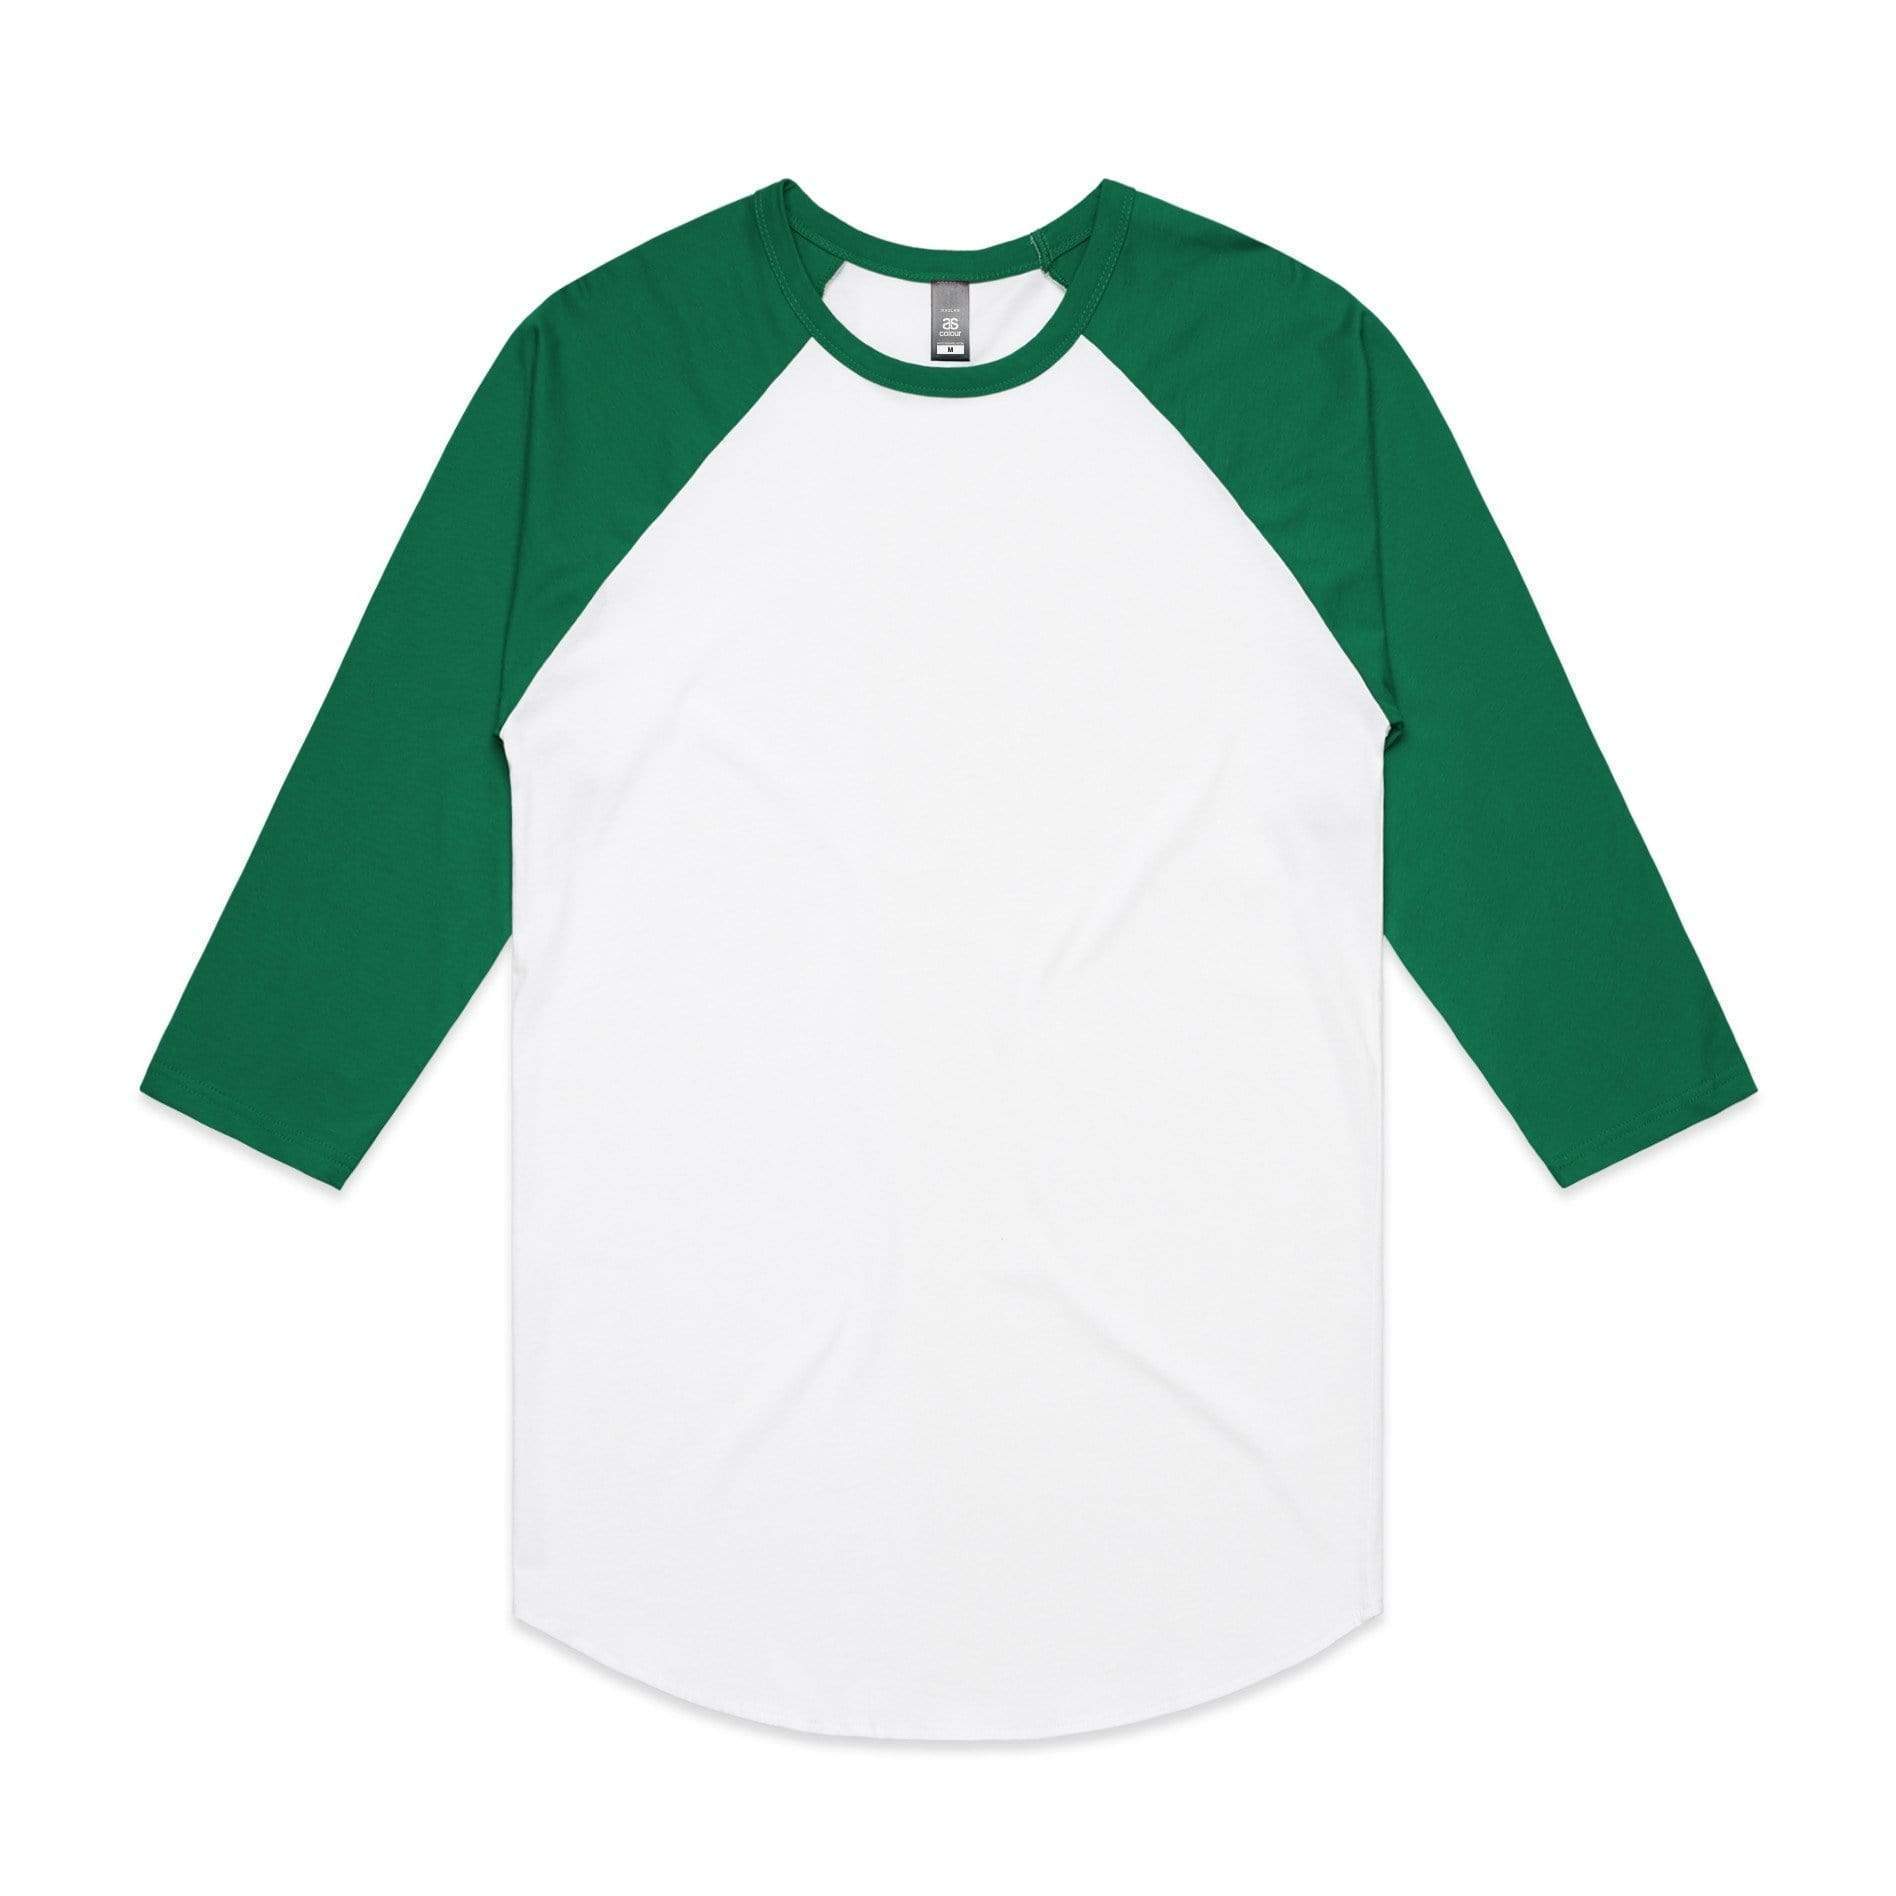 As Colour Casual Wear WHITE/KELLY GREEN / XSM As Colour Men's raglan tee 5012